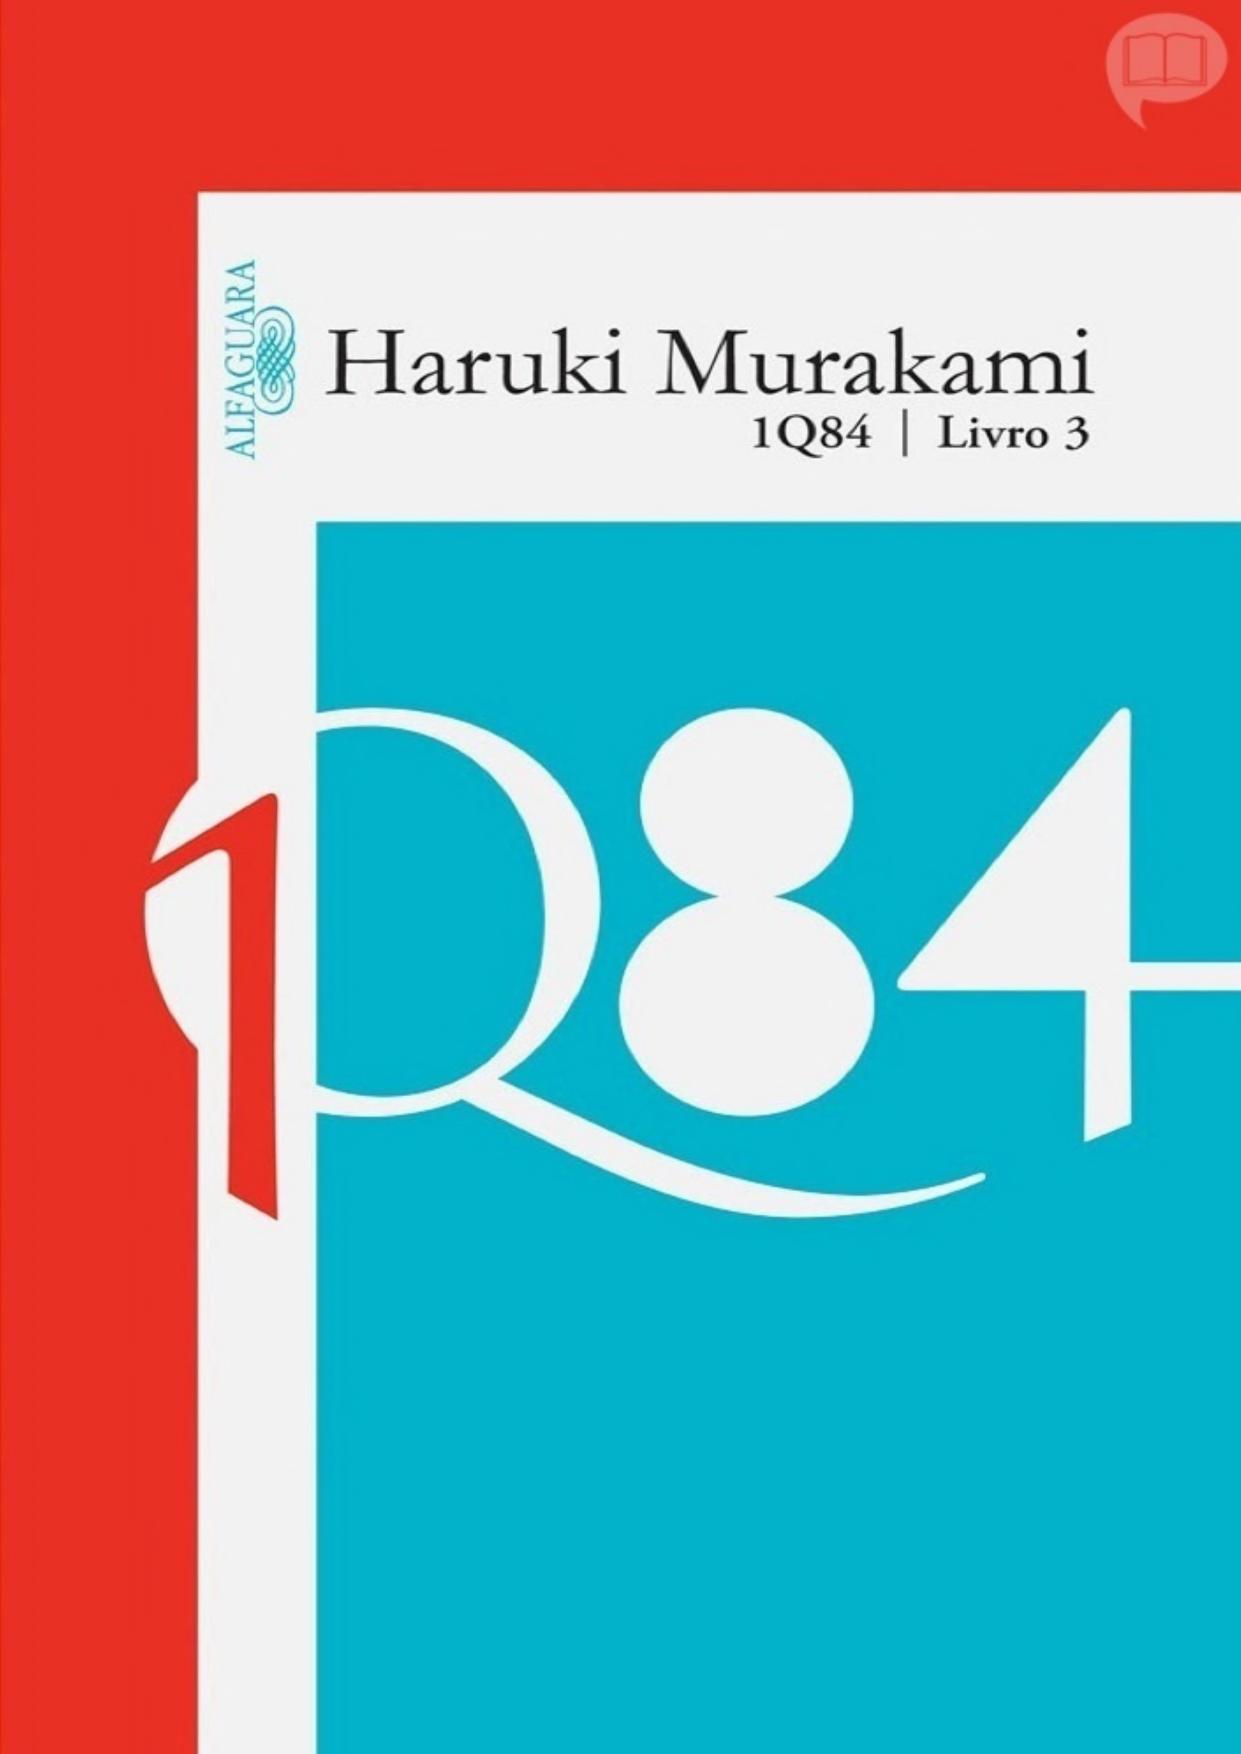 1q84 haruki murakami pdf download